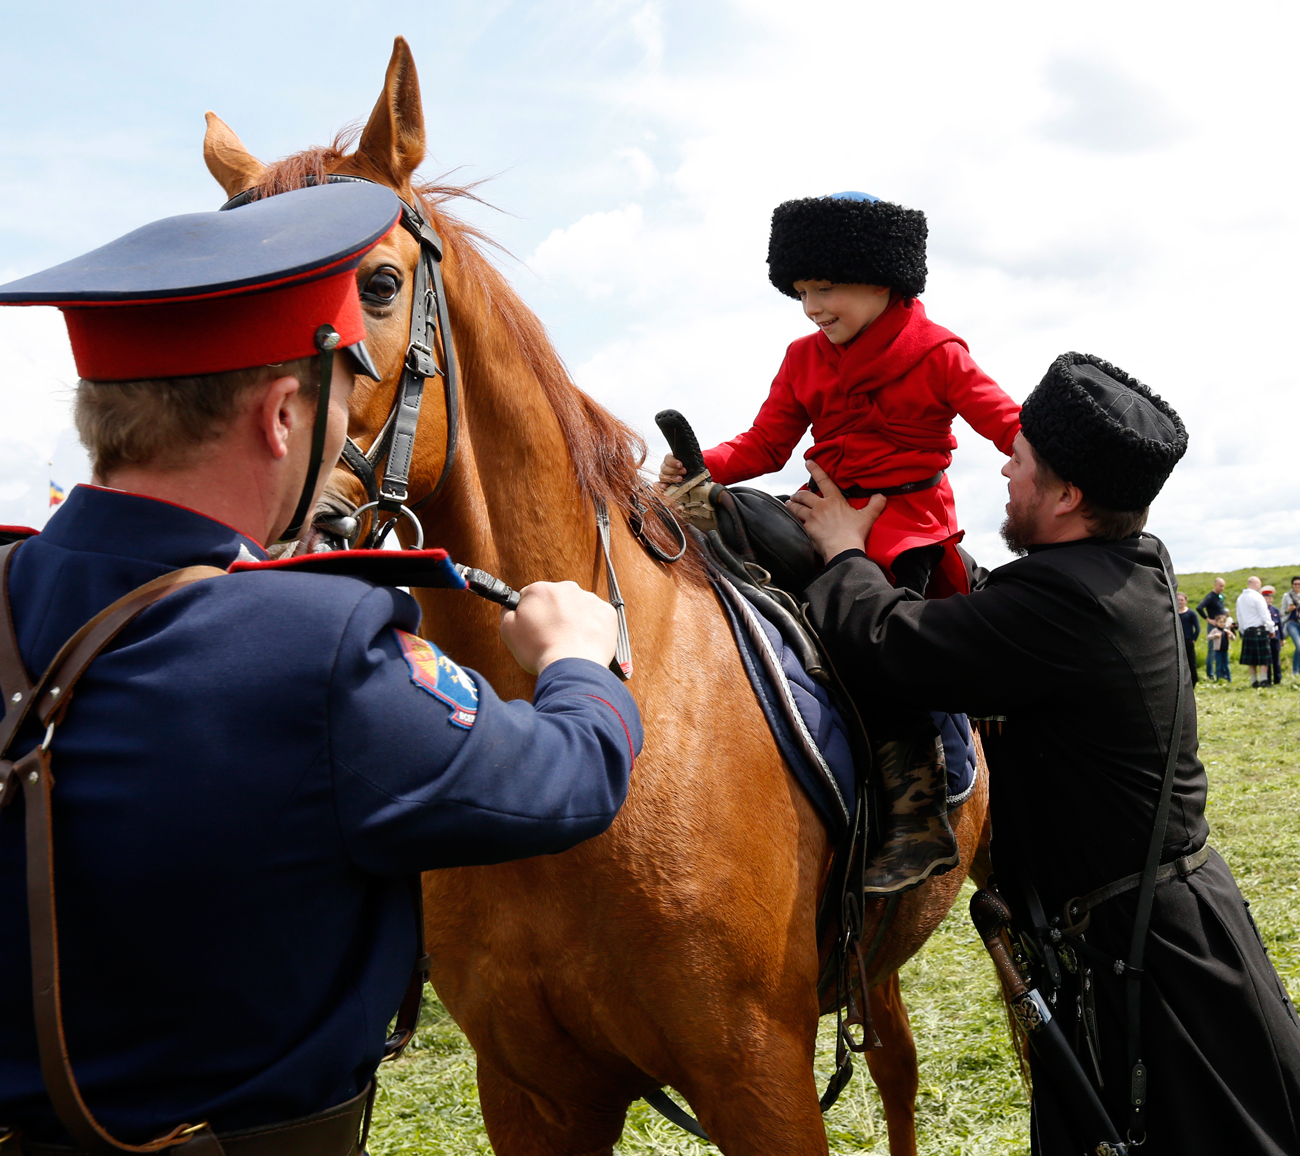 Cossack muda yang berusia antara tiga hingga sepuluh tahun didudukkan di atas kuda. Mereka yang pertama kali duduk di atas pelana secara resmi telah bergabung dengan komunitas Cossack.